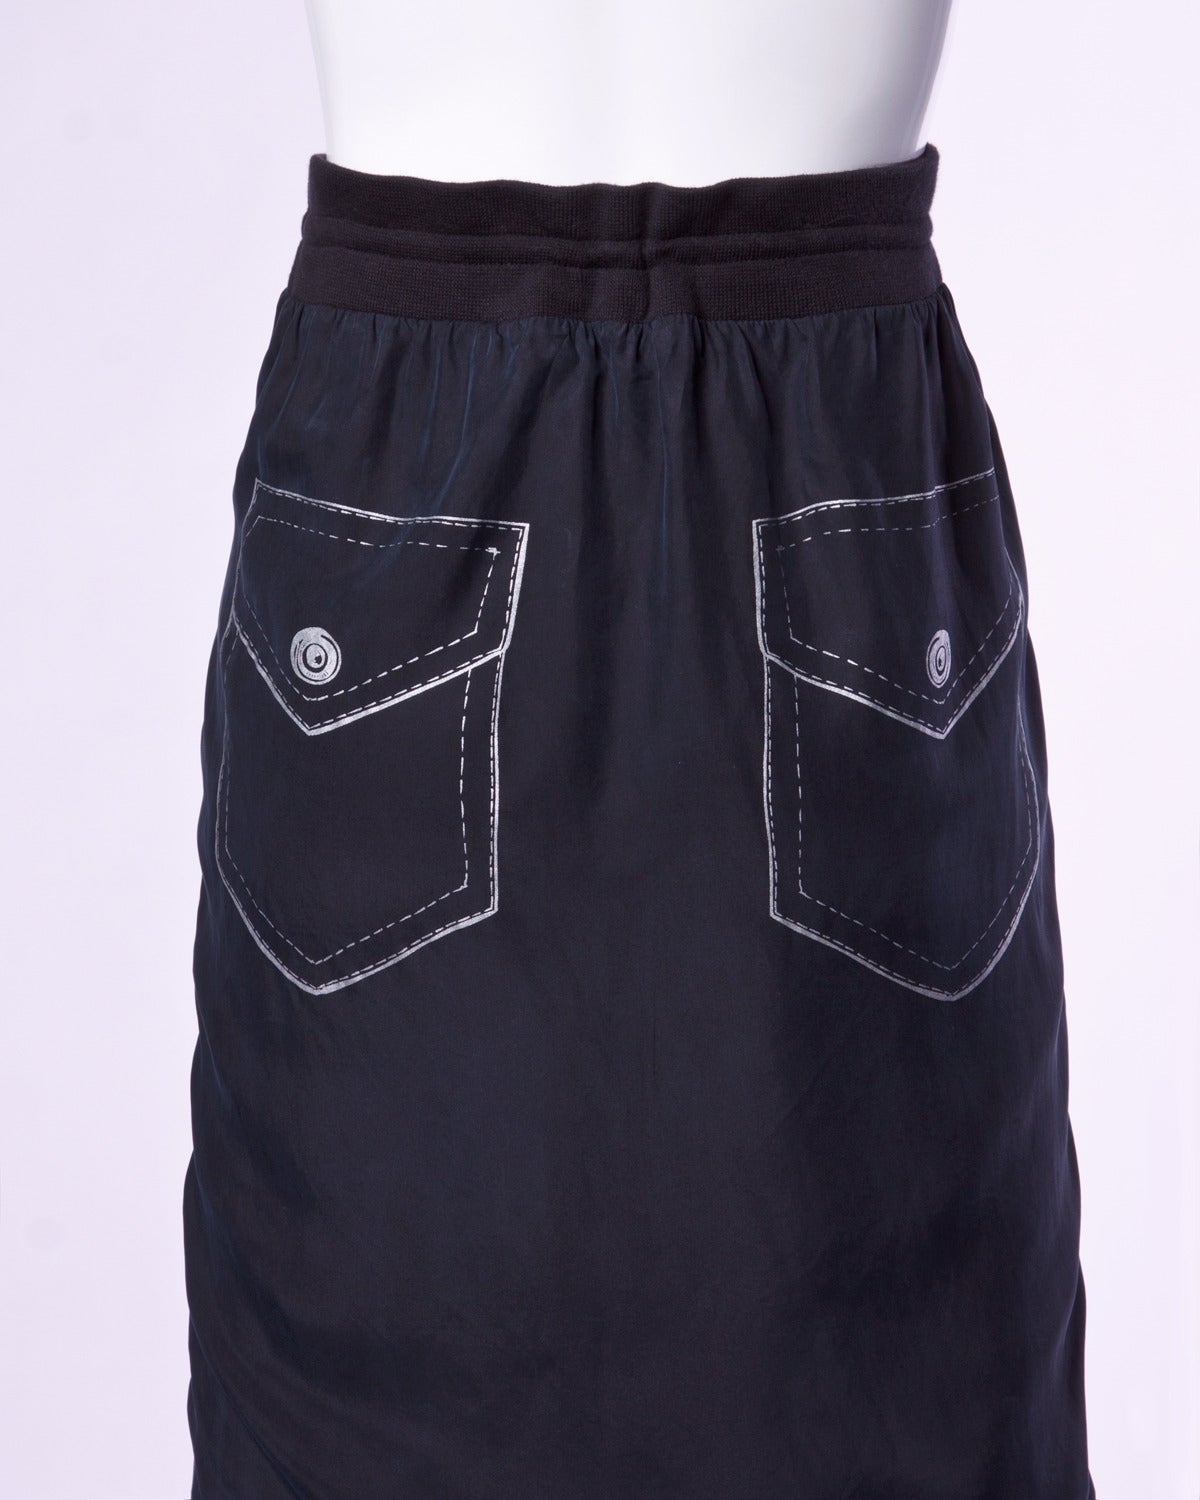 JC de Castelbajac Vintage Trompe L'oeil Stitching + Pockets Silk Skirt 1